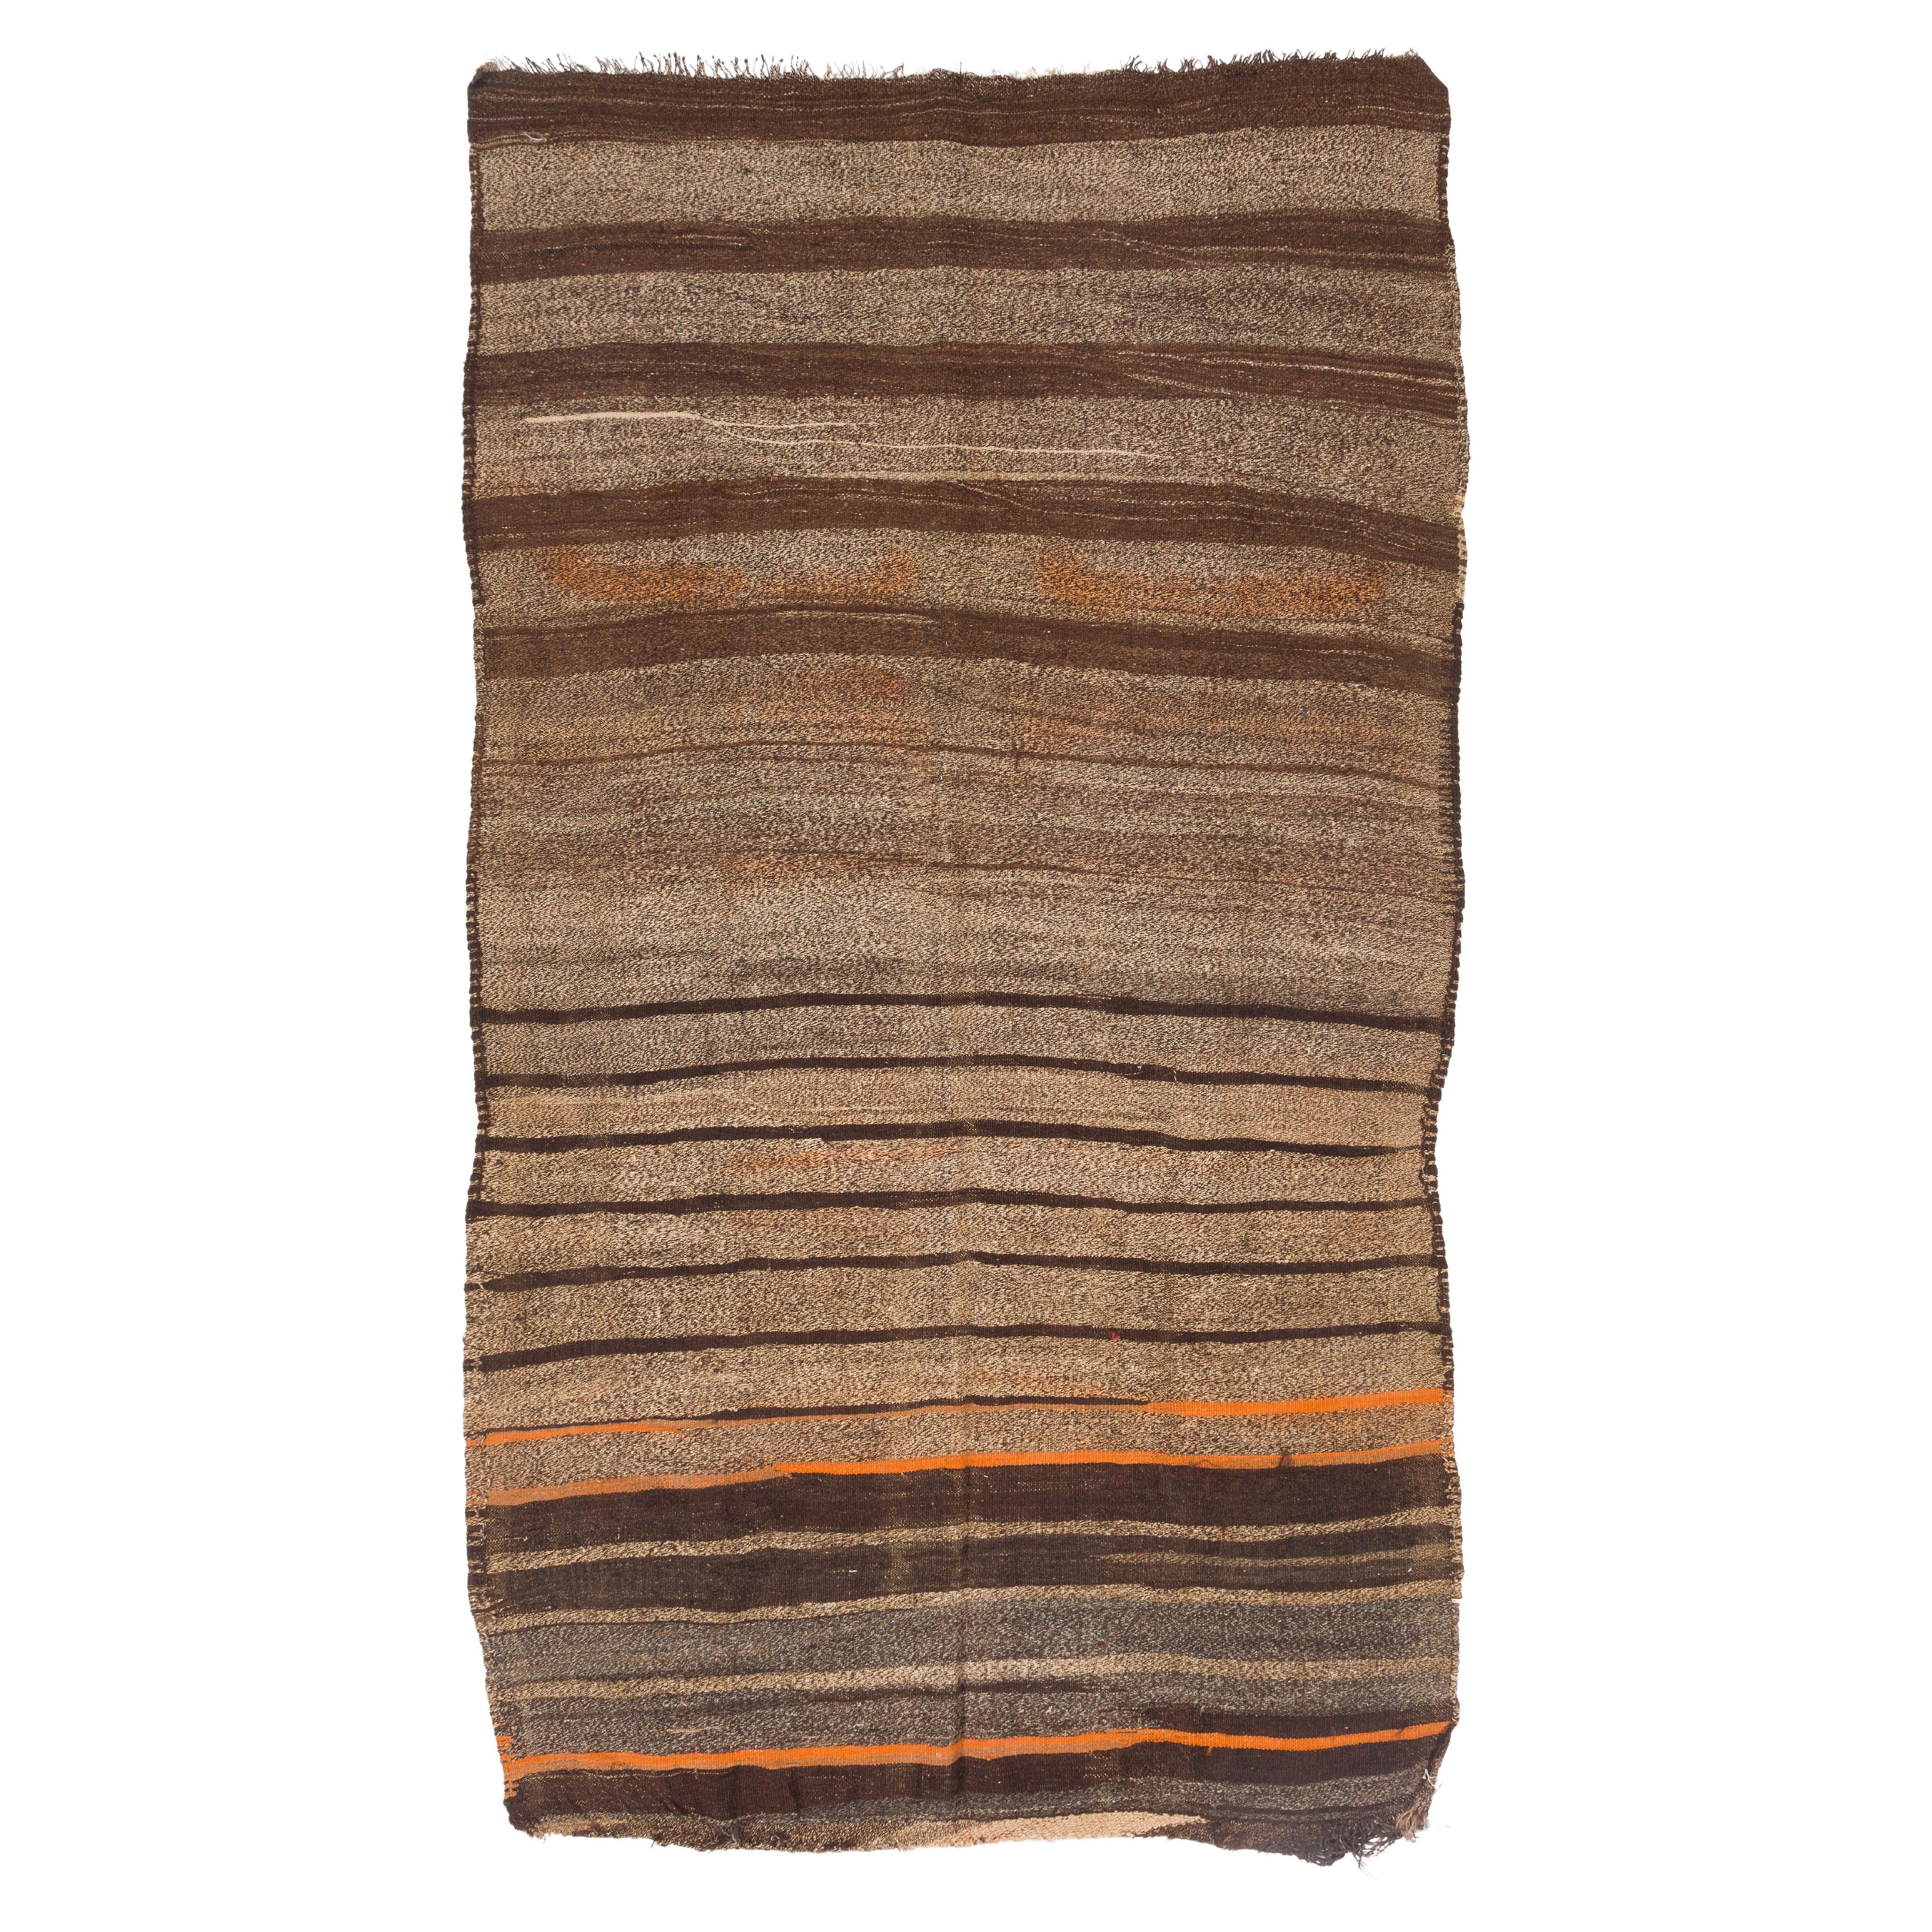 5.7x7.6 Ft Striped Vintage Handmade Wool Runner Kilim in Brown, Beige and Orange For Sale